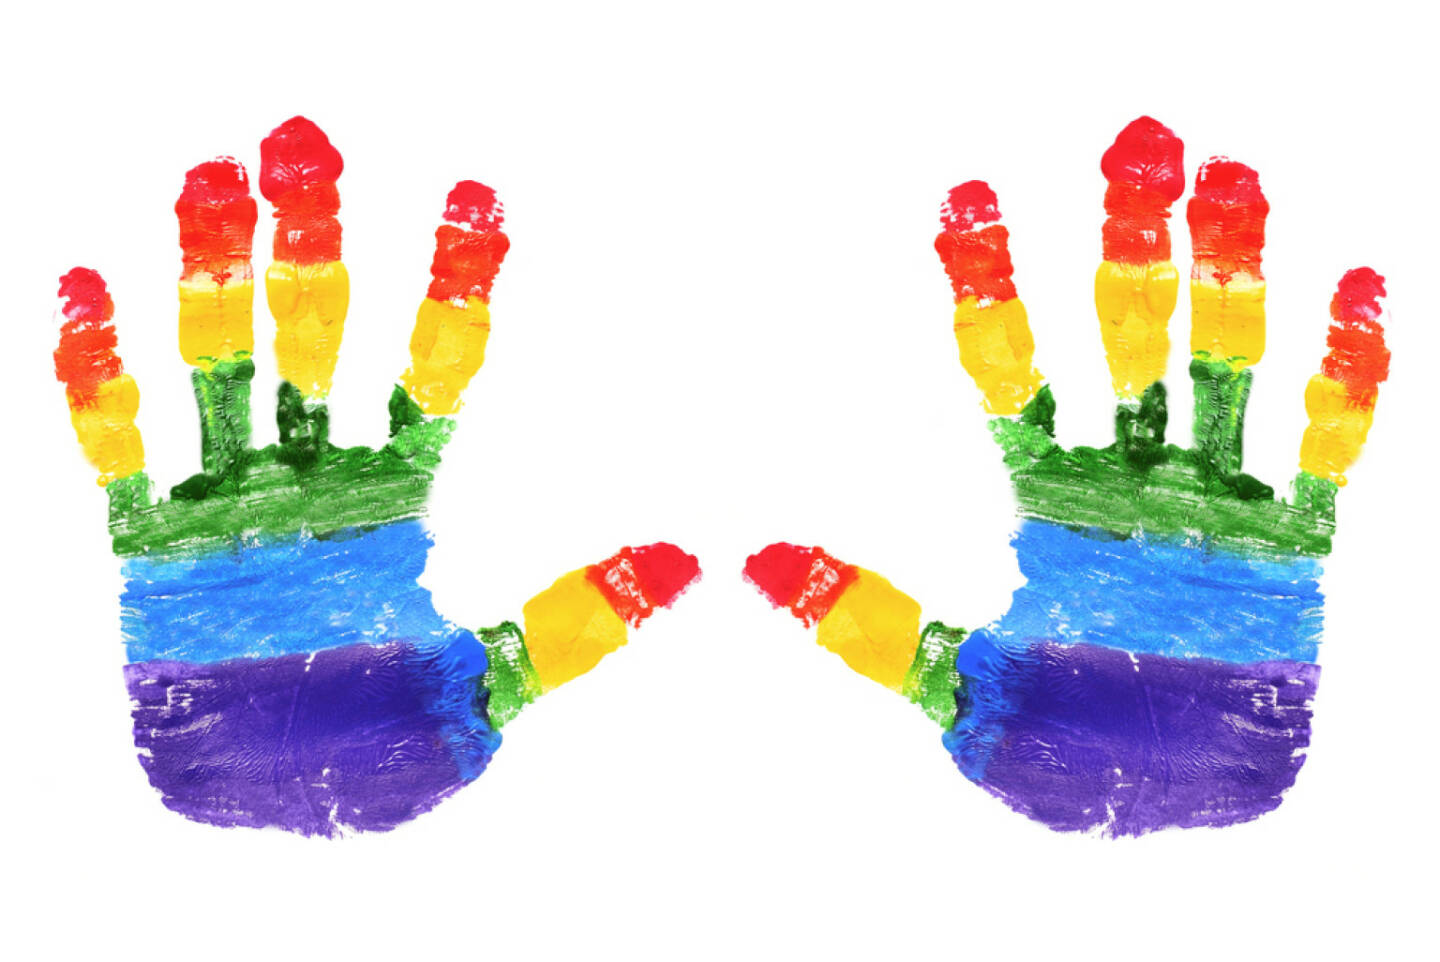 10, zehn, Hand, Hände, Handabdruck, Regenbogen, Love Parade, Toleranz, Diversität, Diversity, http://www.shutterstock.com/de/pic-200828669/stock-photo-handprints-with-the-colors-of-the-rainbow-flag-on-a-white-background.html